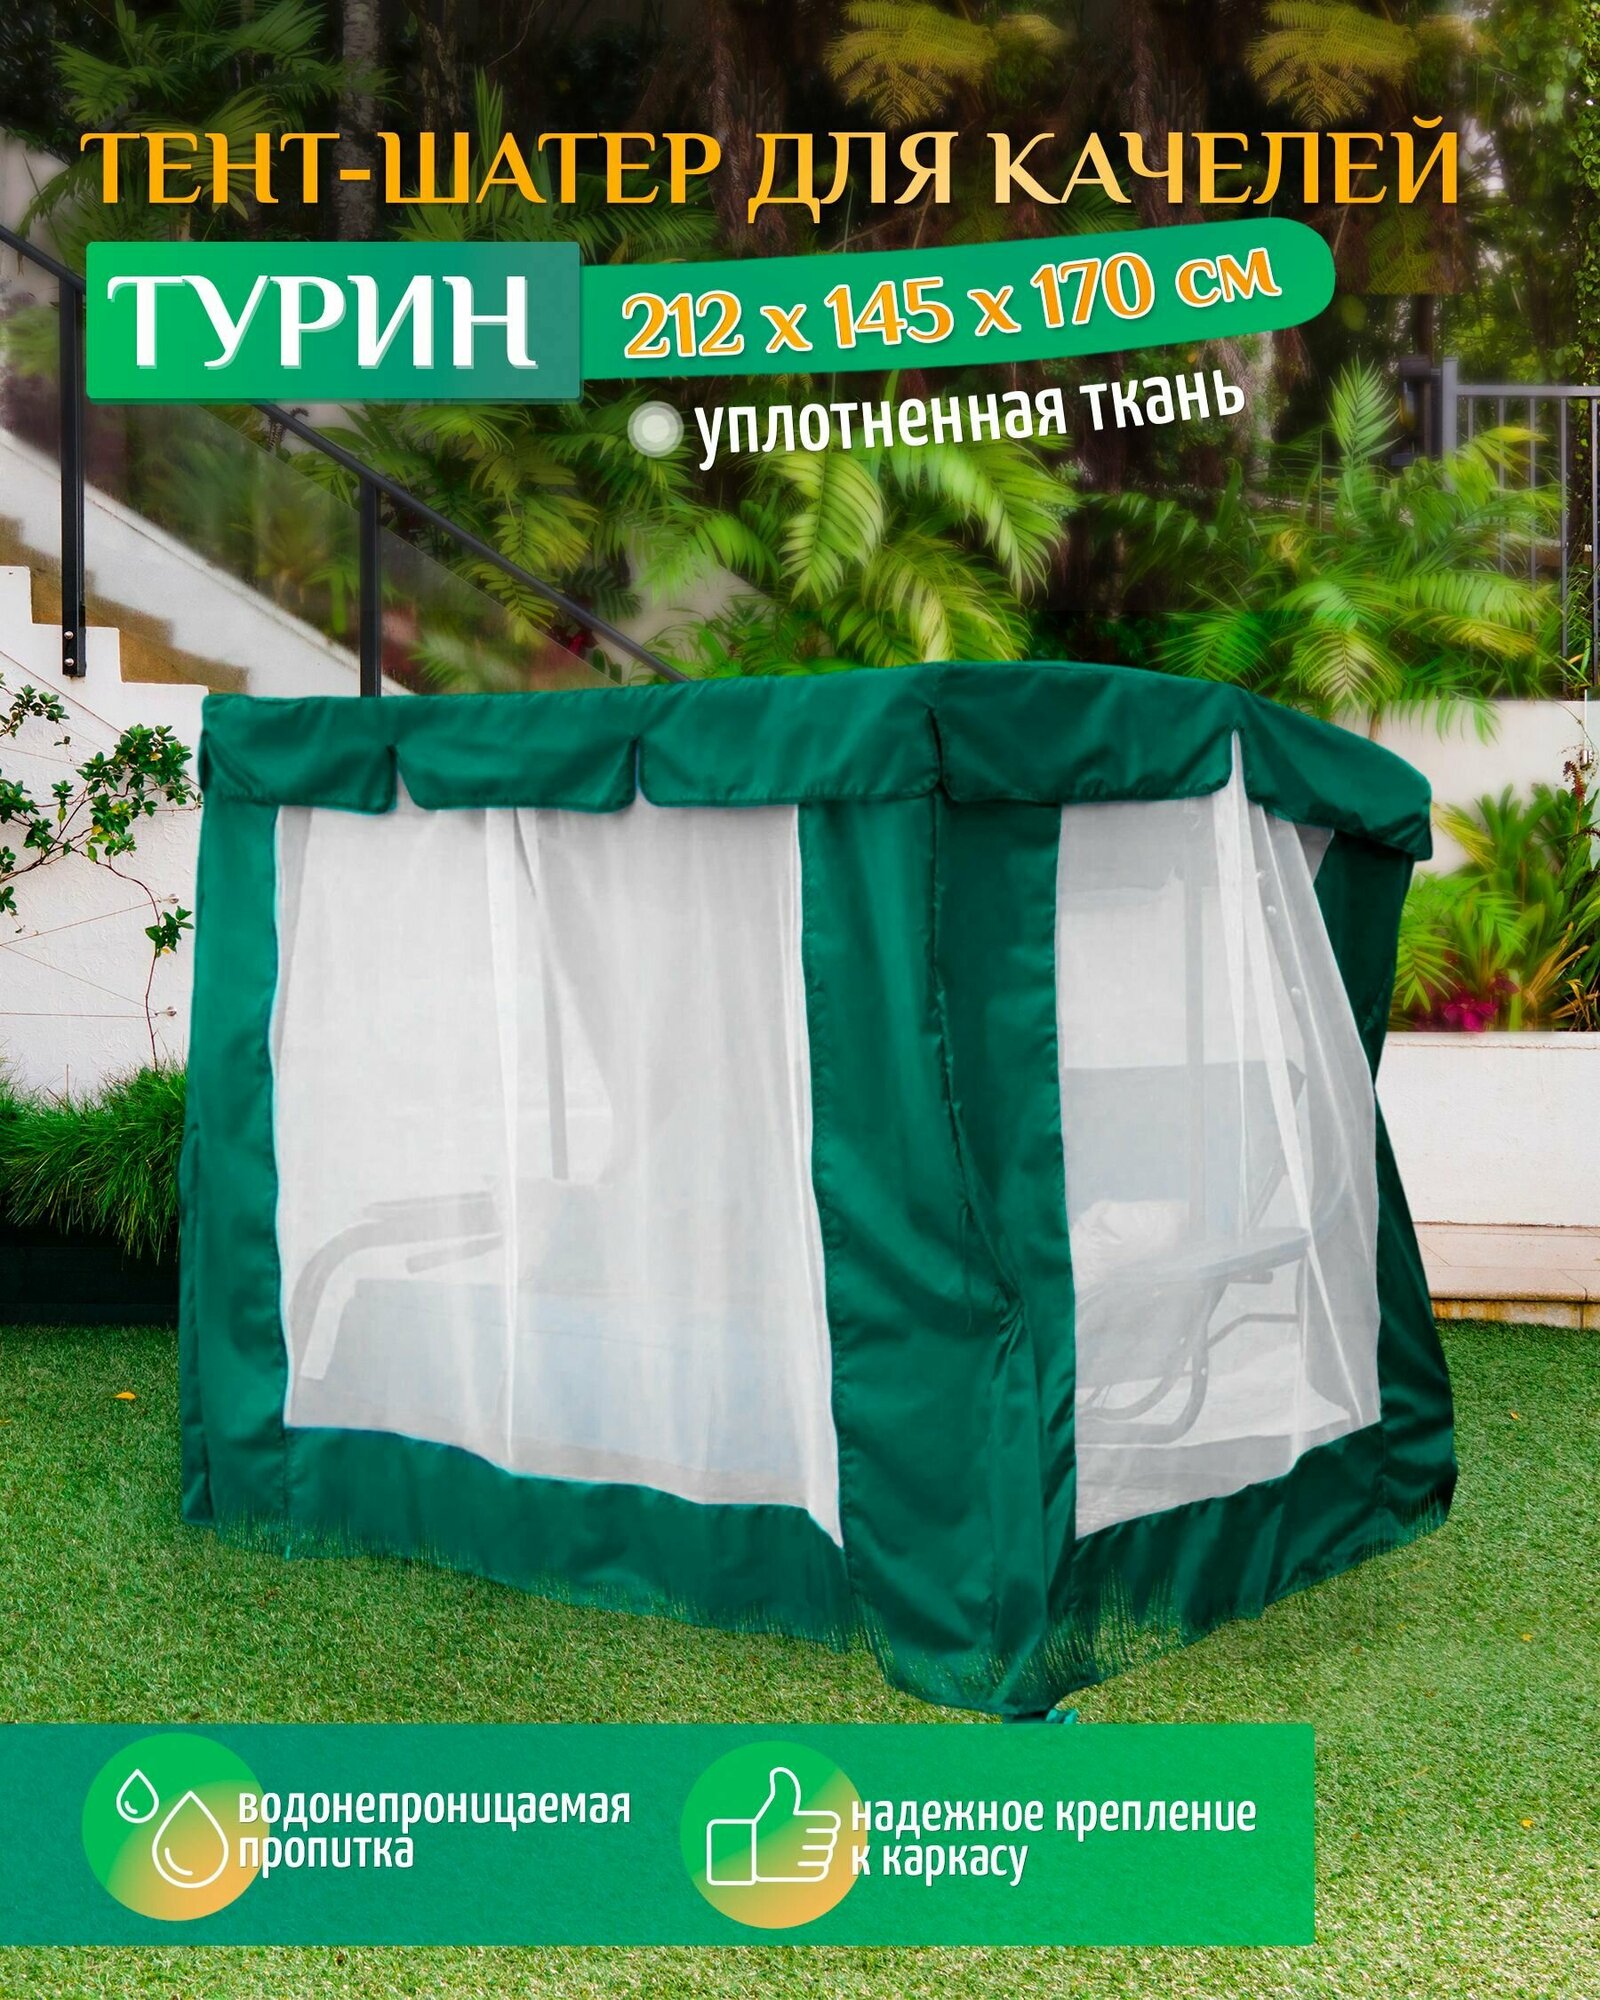 Тент шатер для качелей Турин (212х145х170 см) зеленый